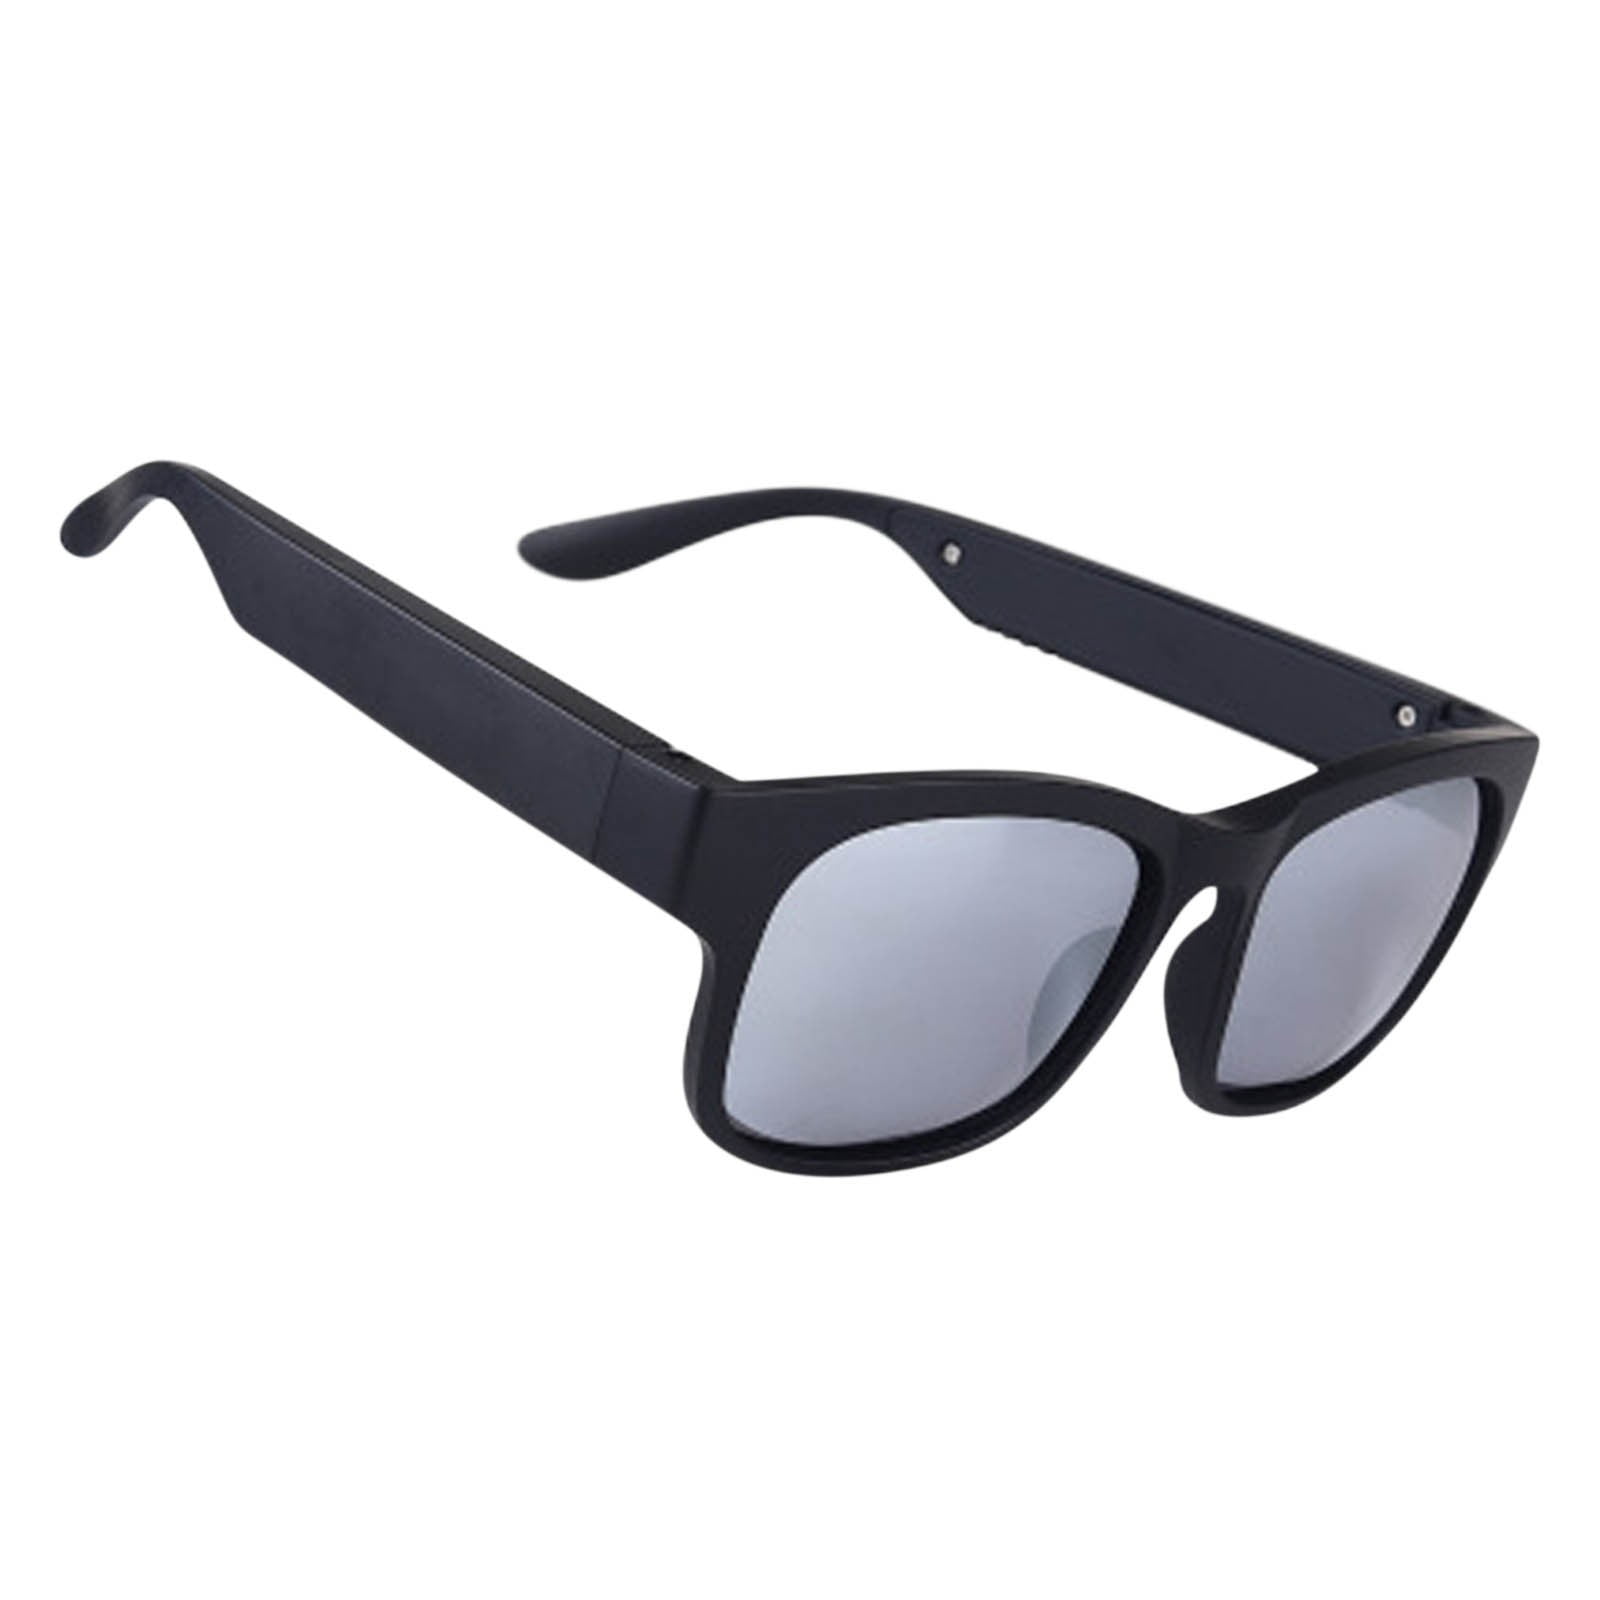 EQWLJWE New Polarized Bluetooth Sunglasses Conduction Headset